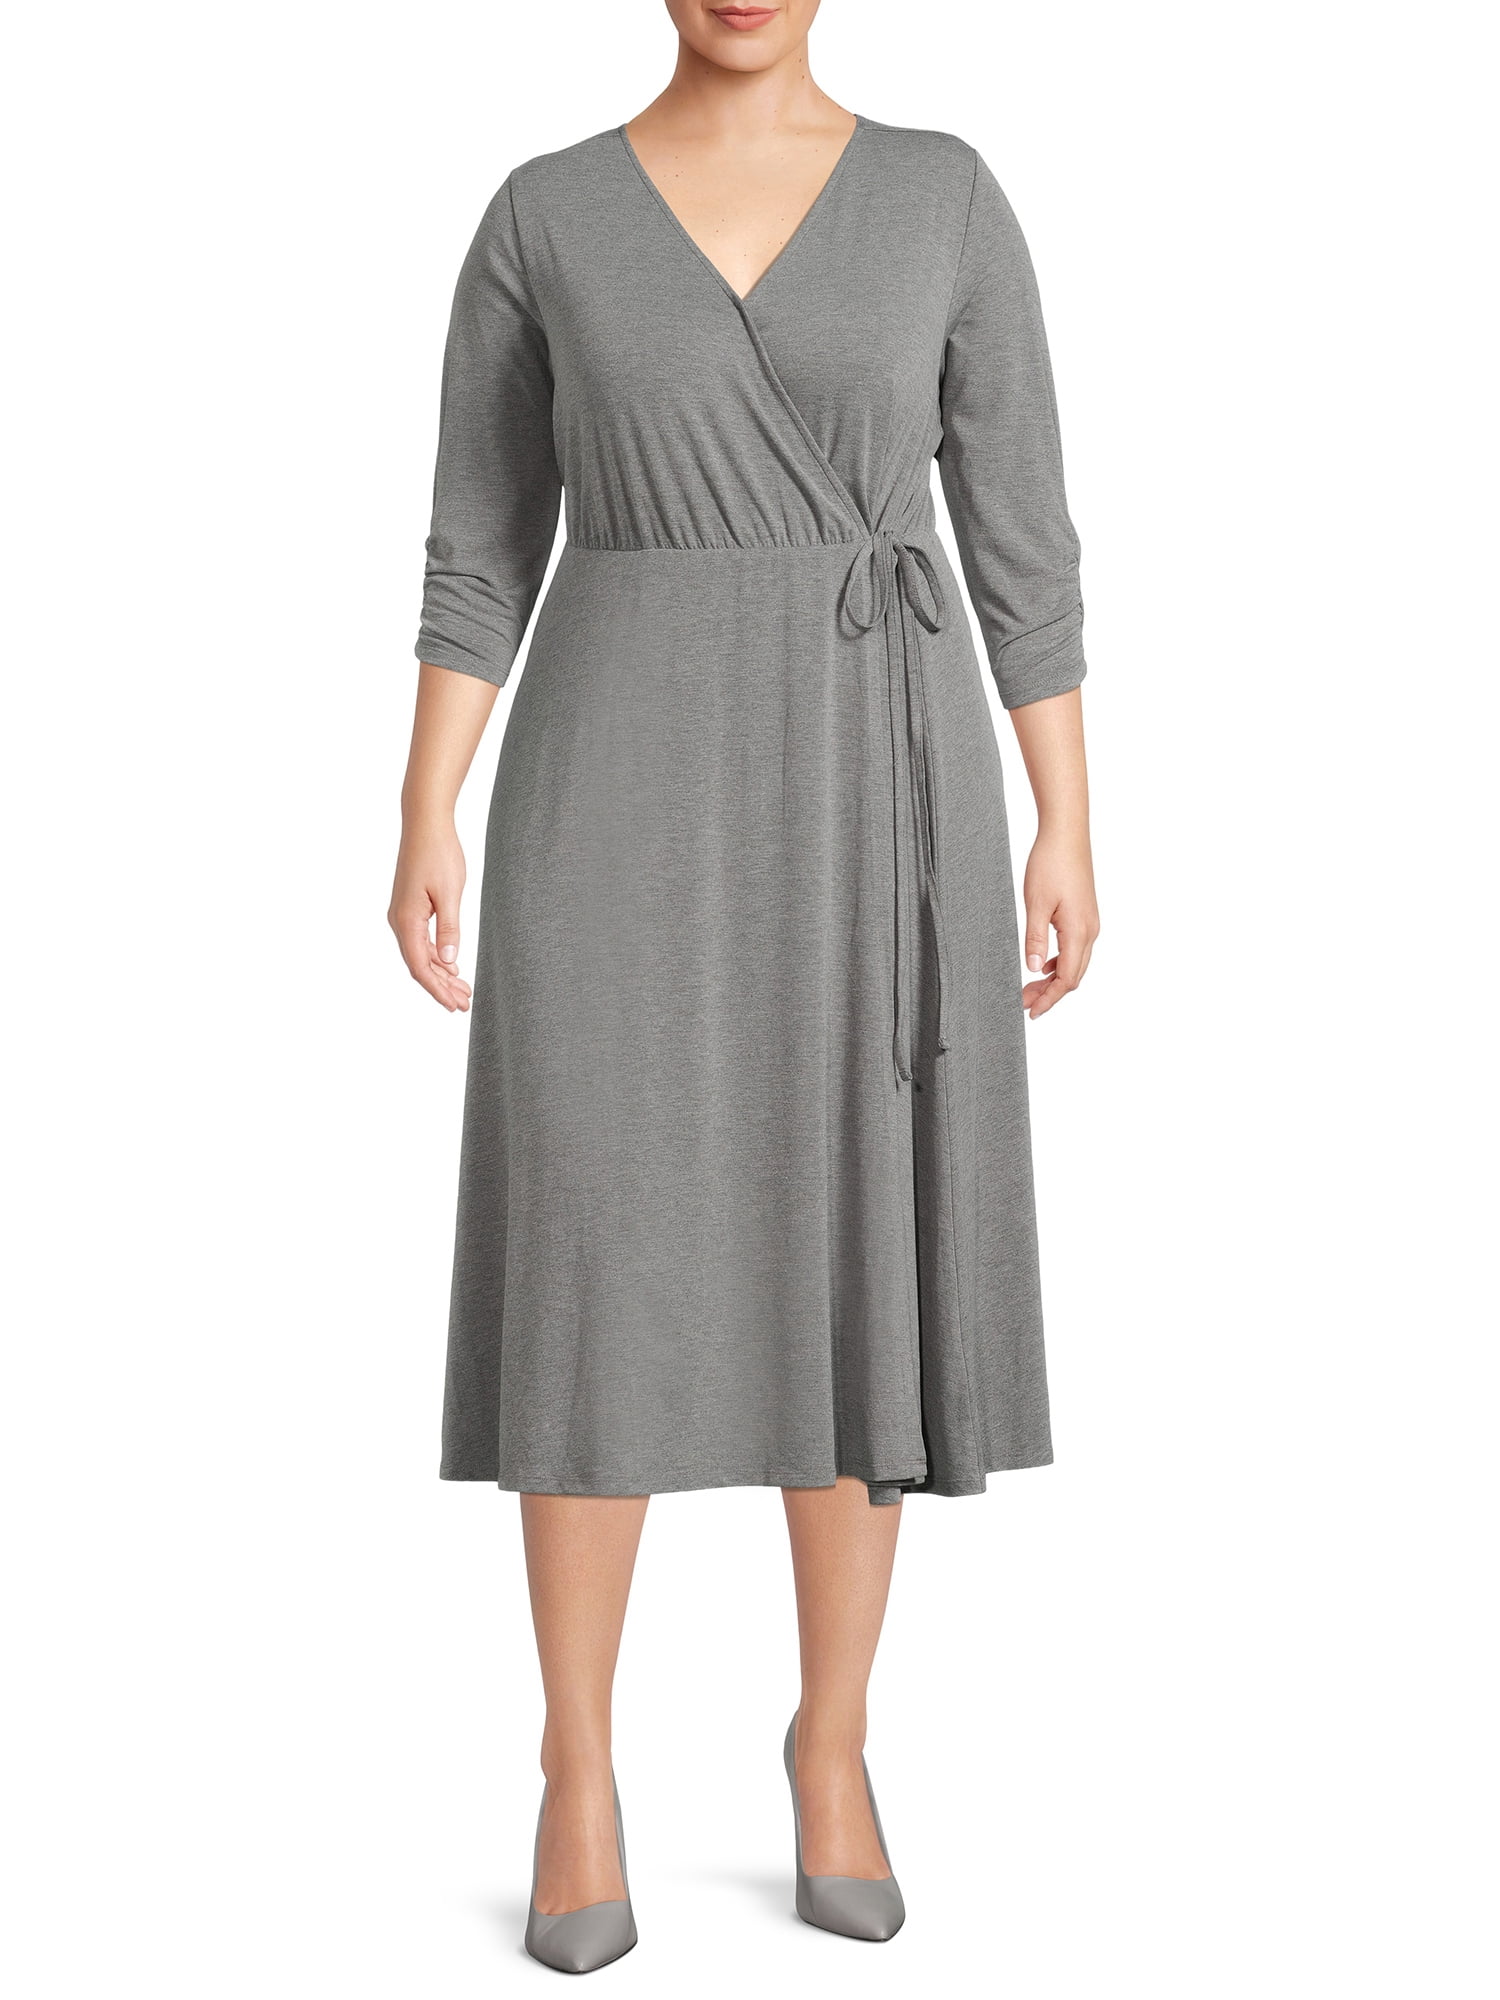 Terra \u0026 Sky Women's Plus Size Faux Wrap Dress - Walmart.com